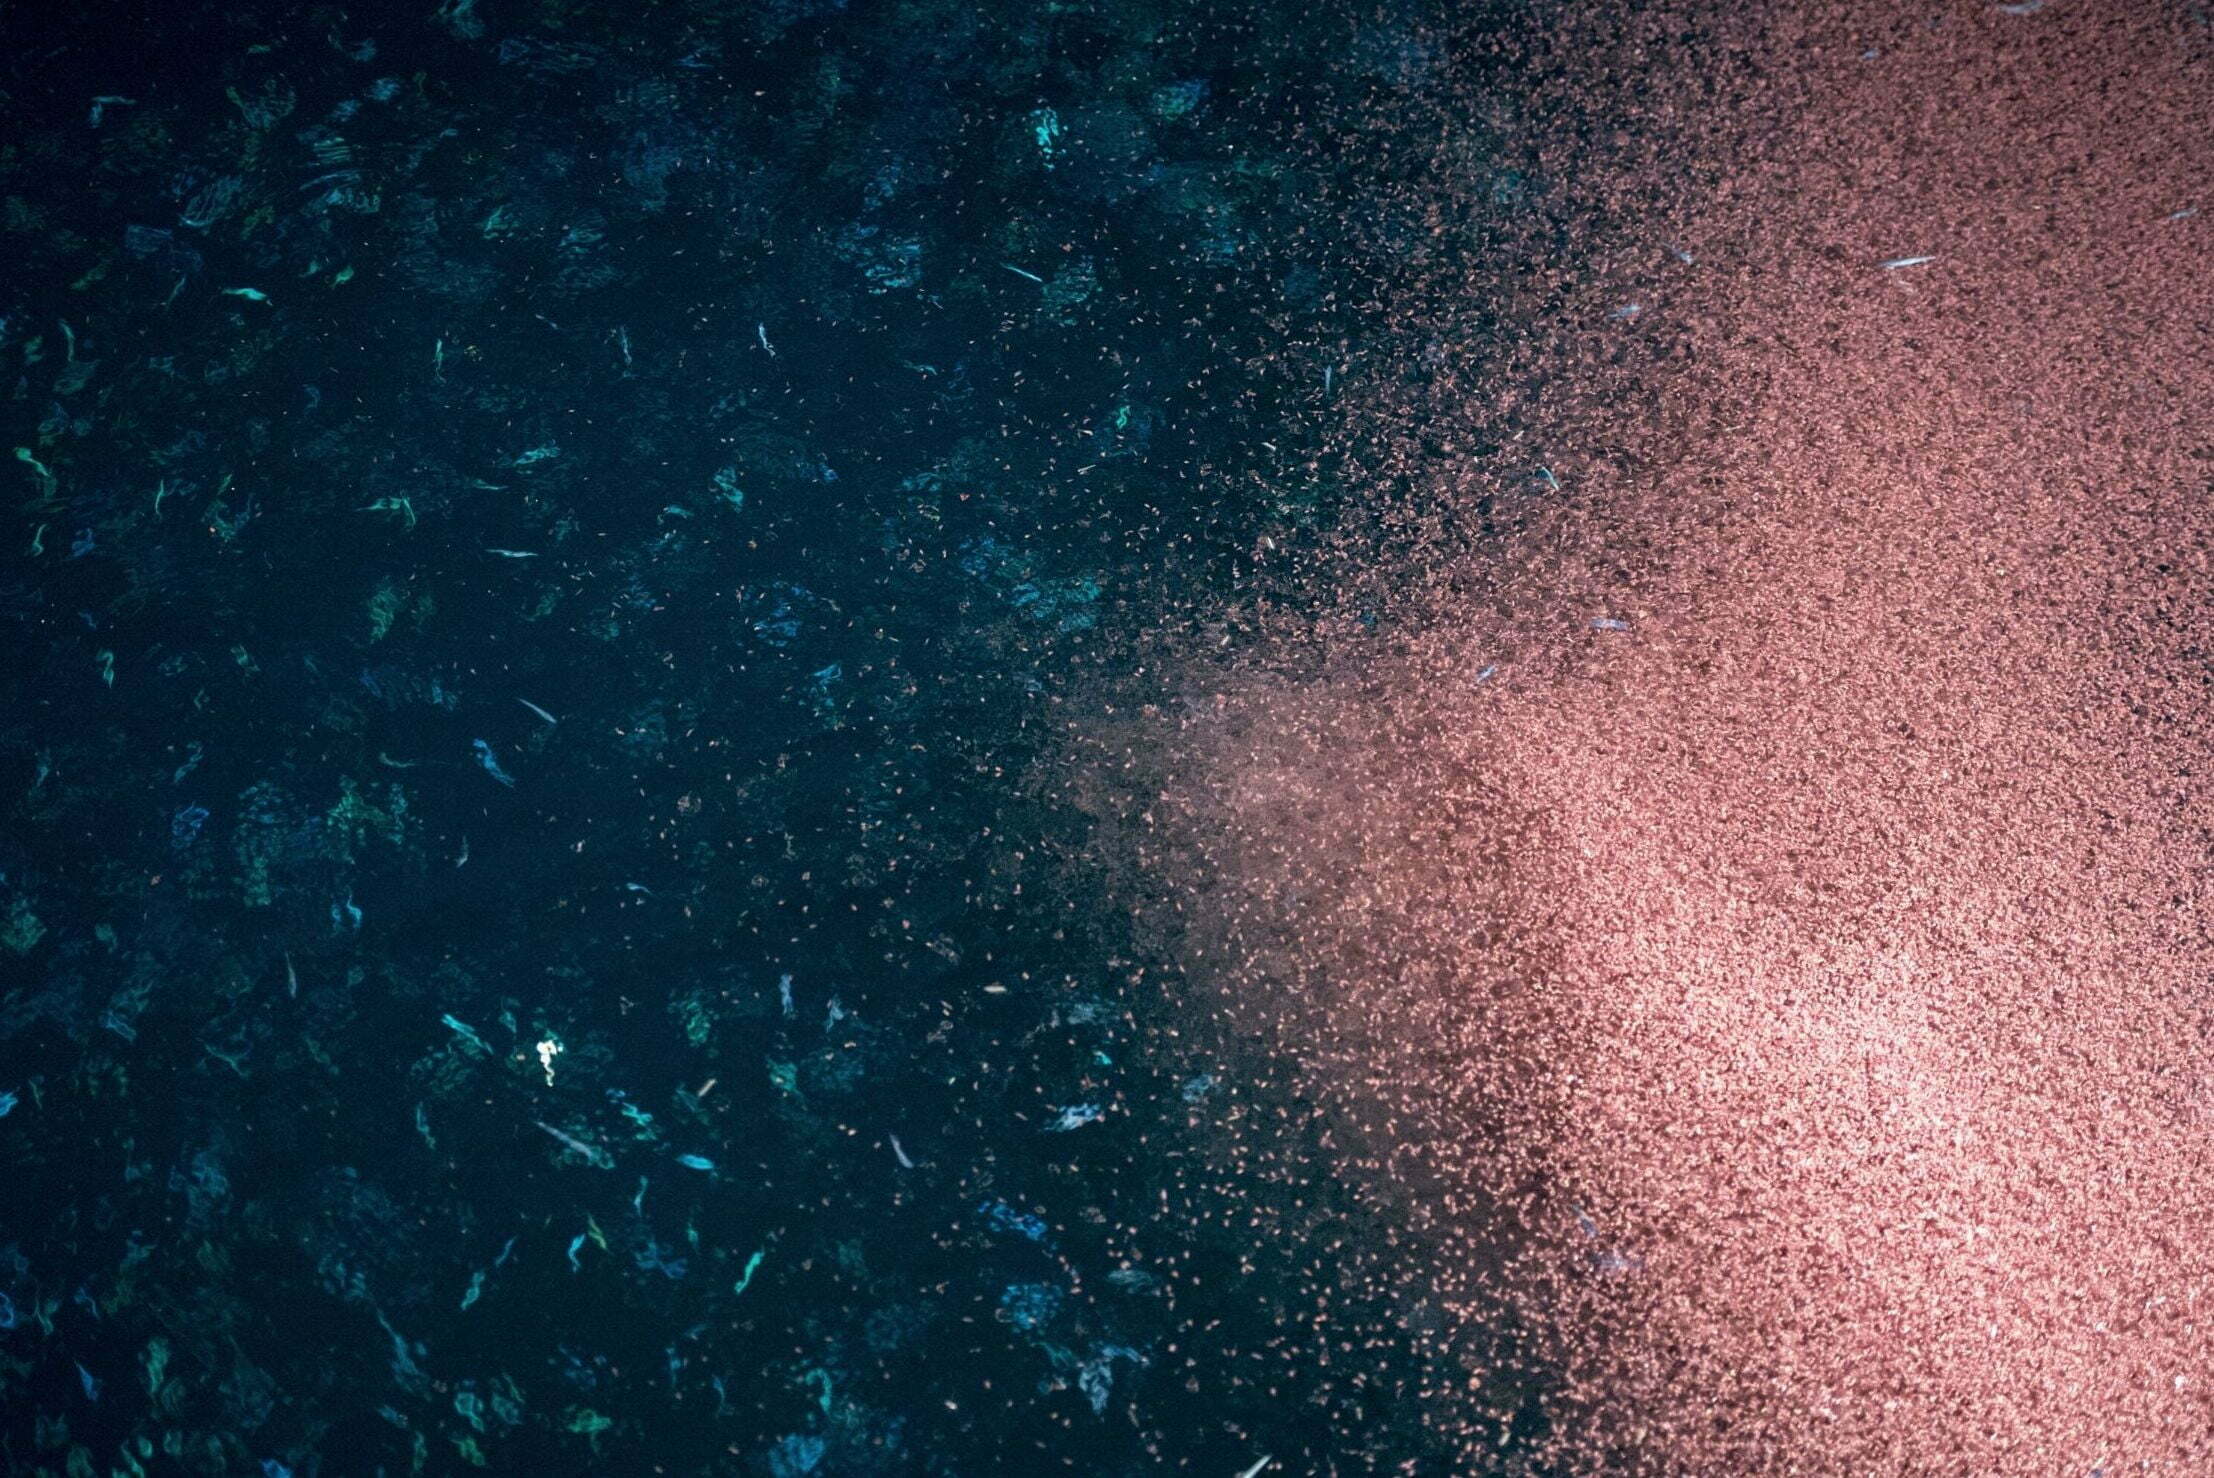 krill swarm phytoplankton